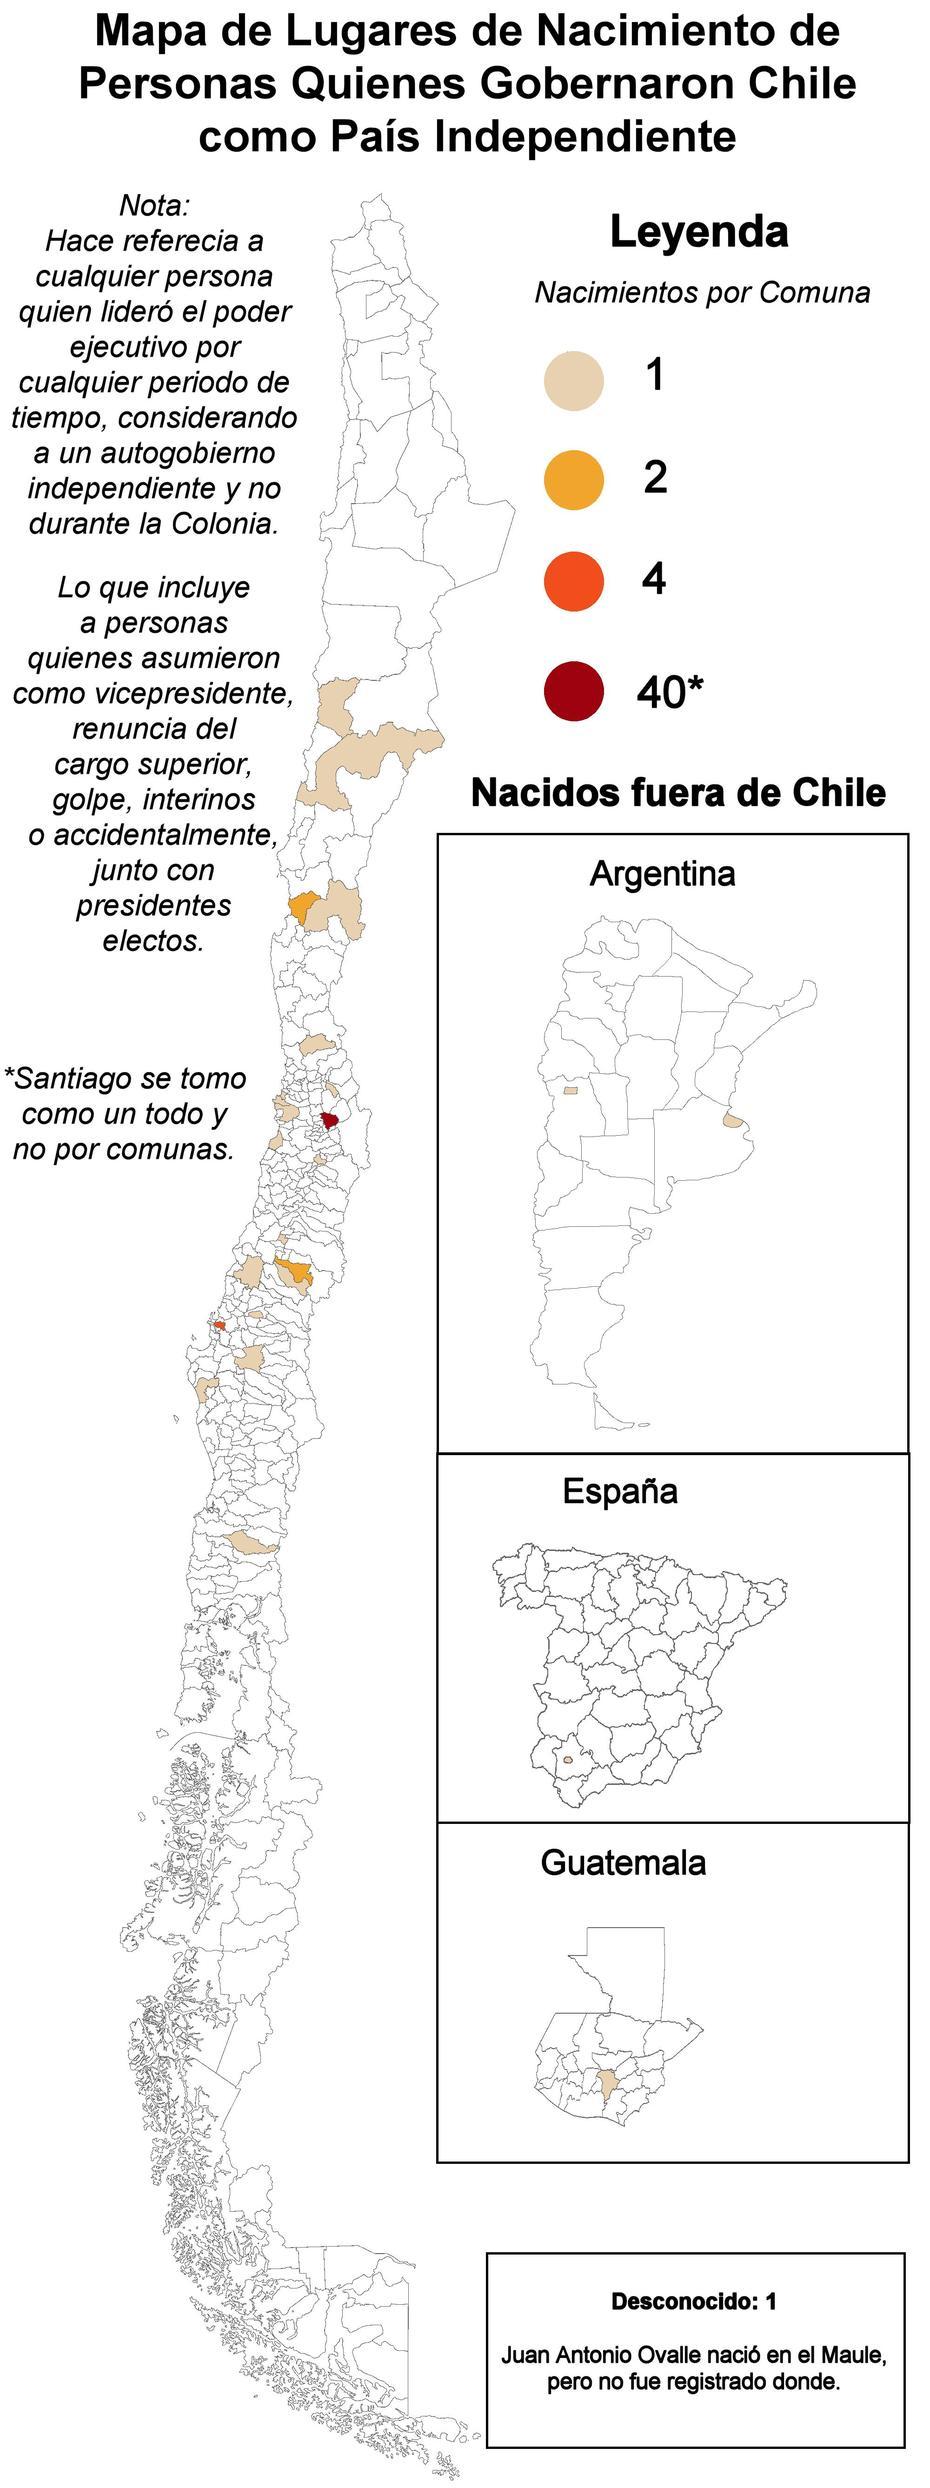 Chile In World, Pucon Chile, Personas Quienes, Nacimiento, Chile